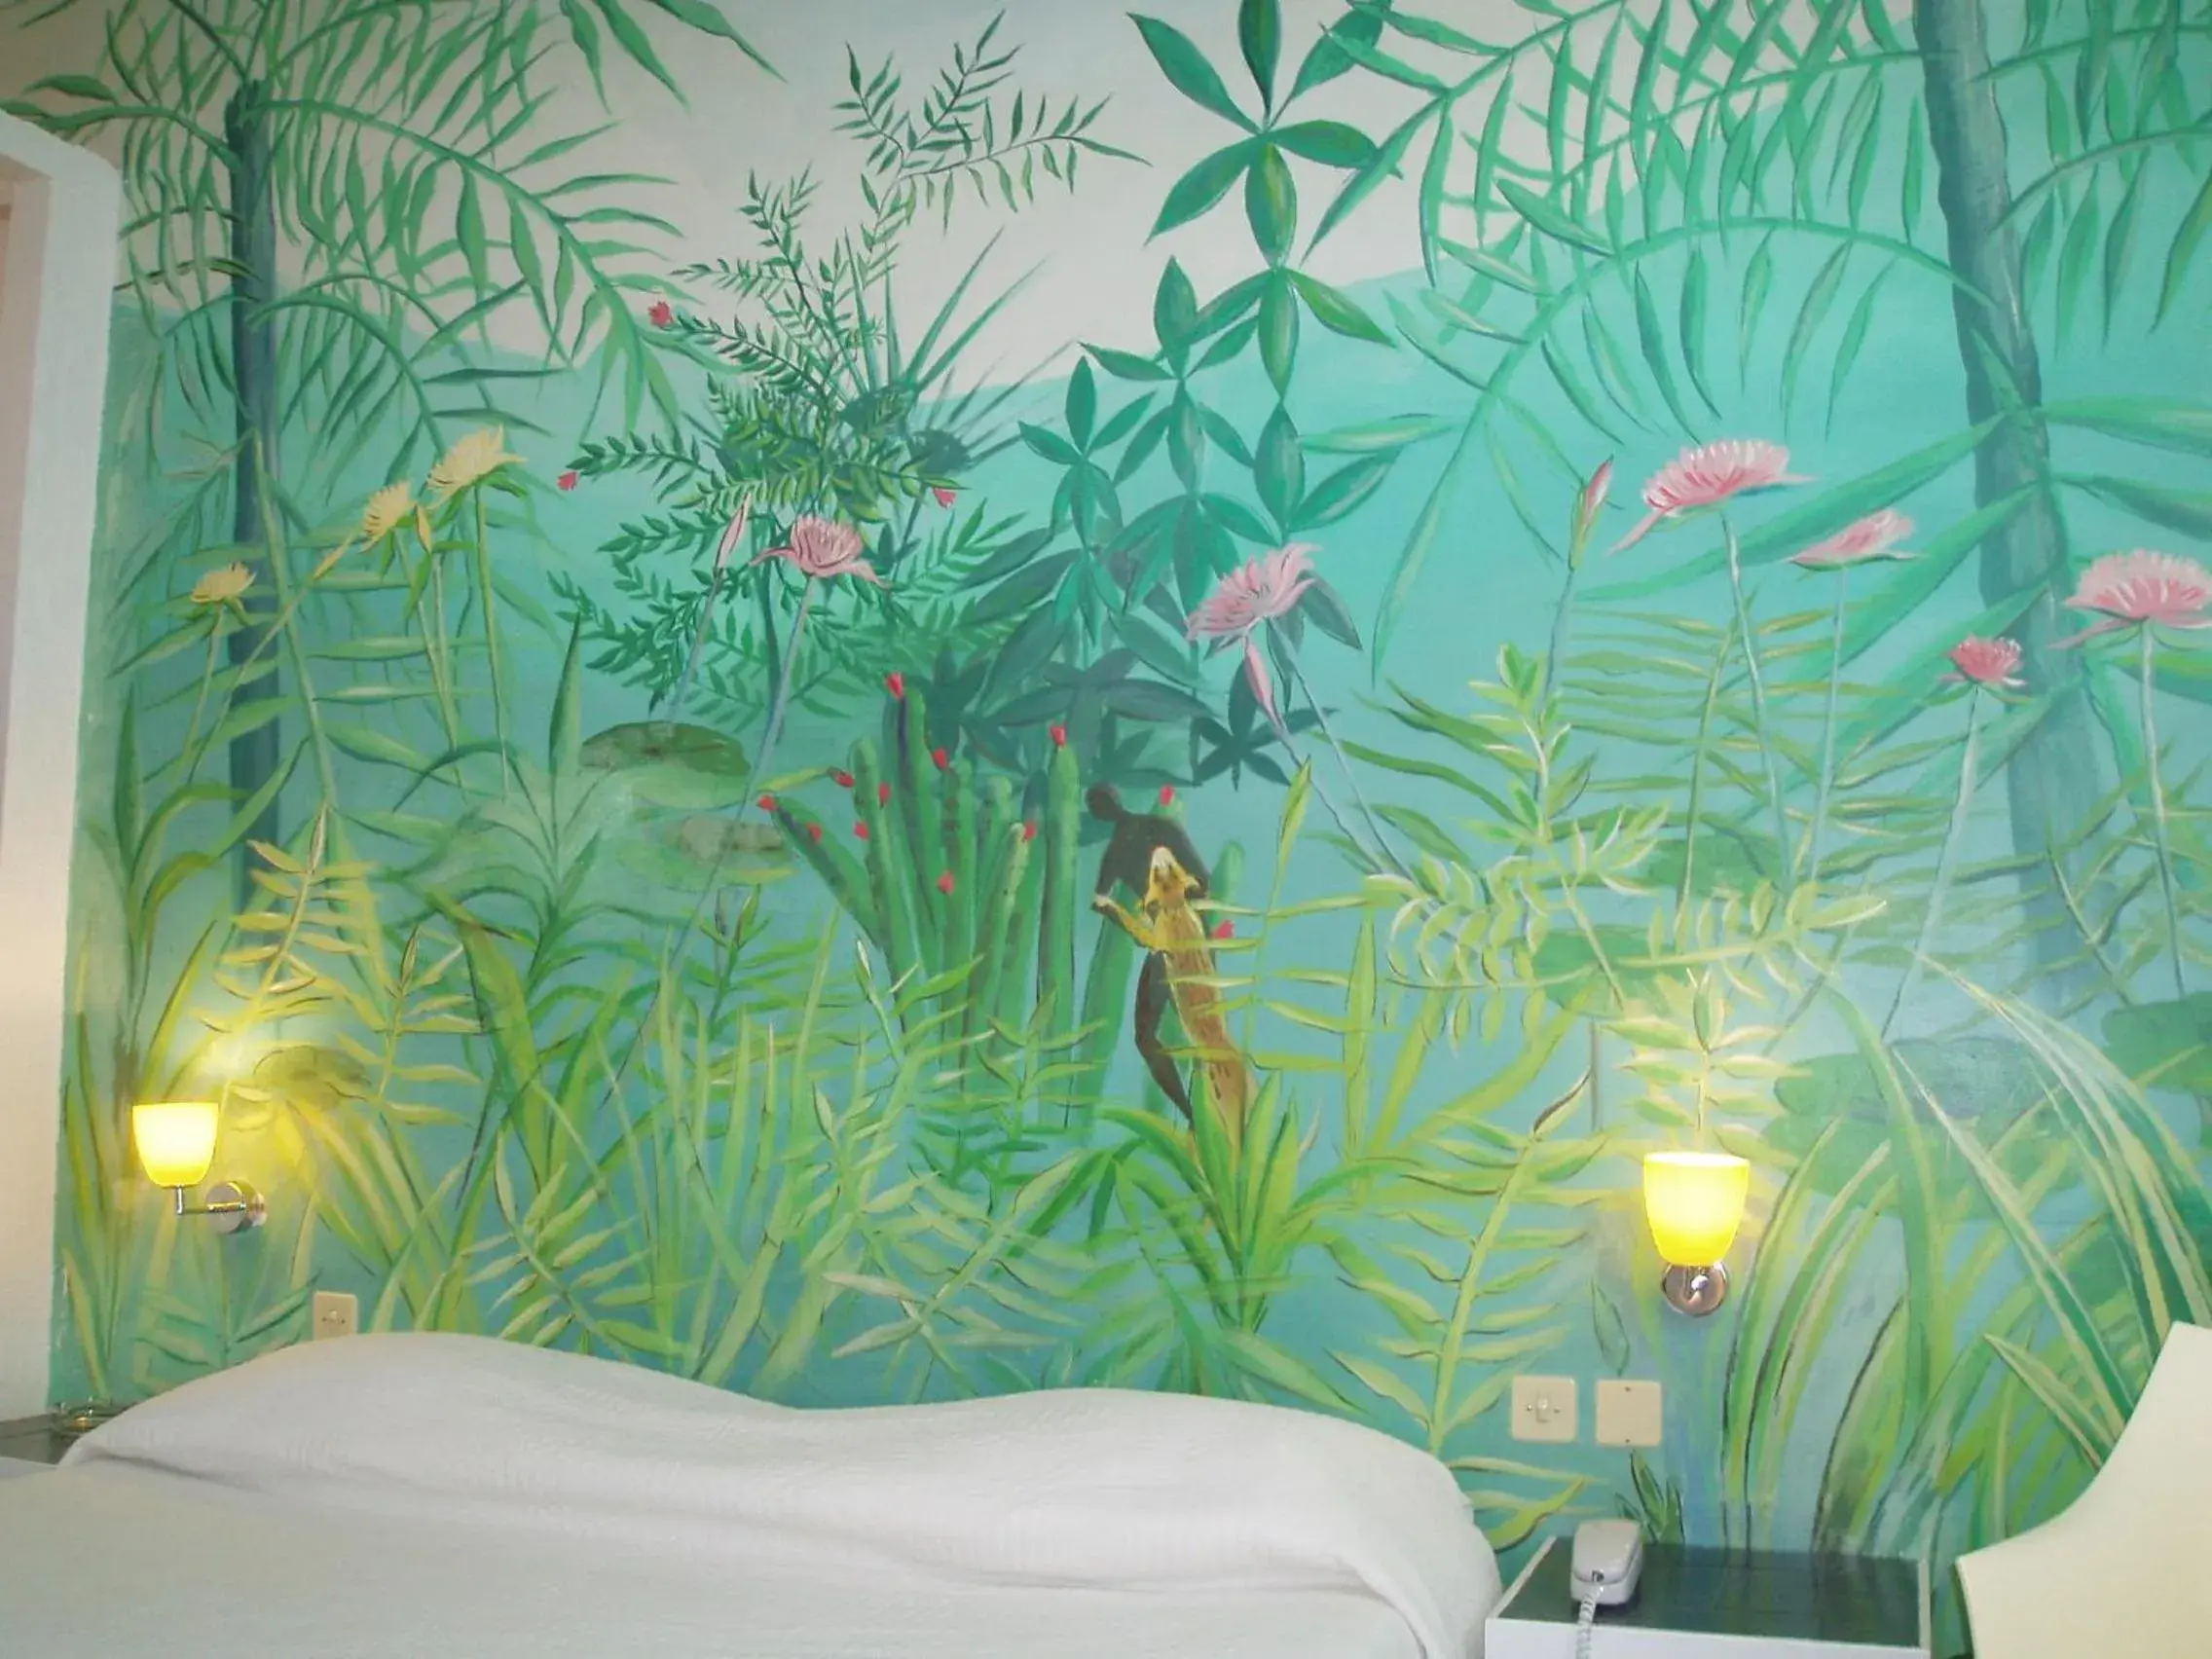 Decorative detail in Le Windsor, Jungle Art Hotel